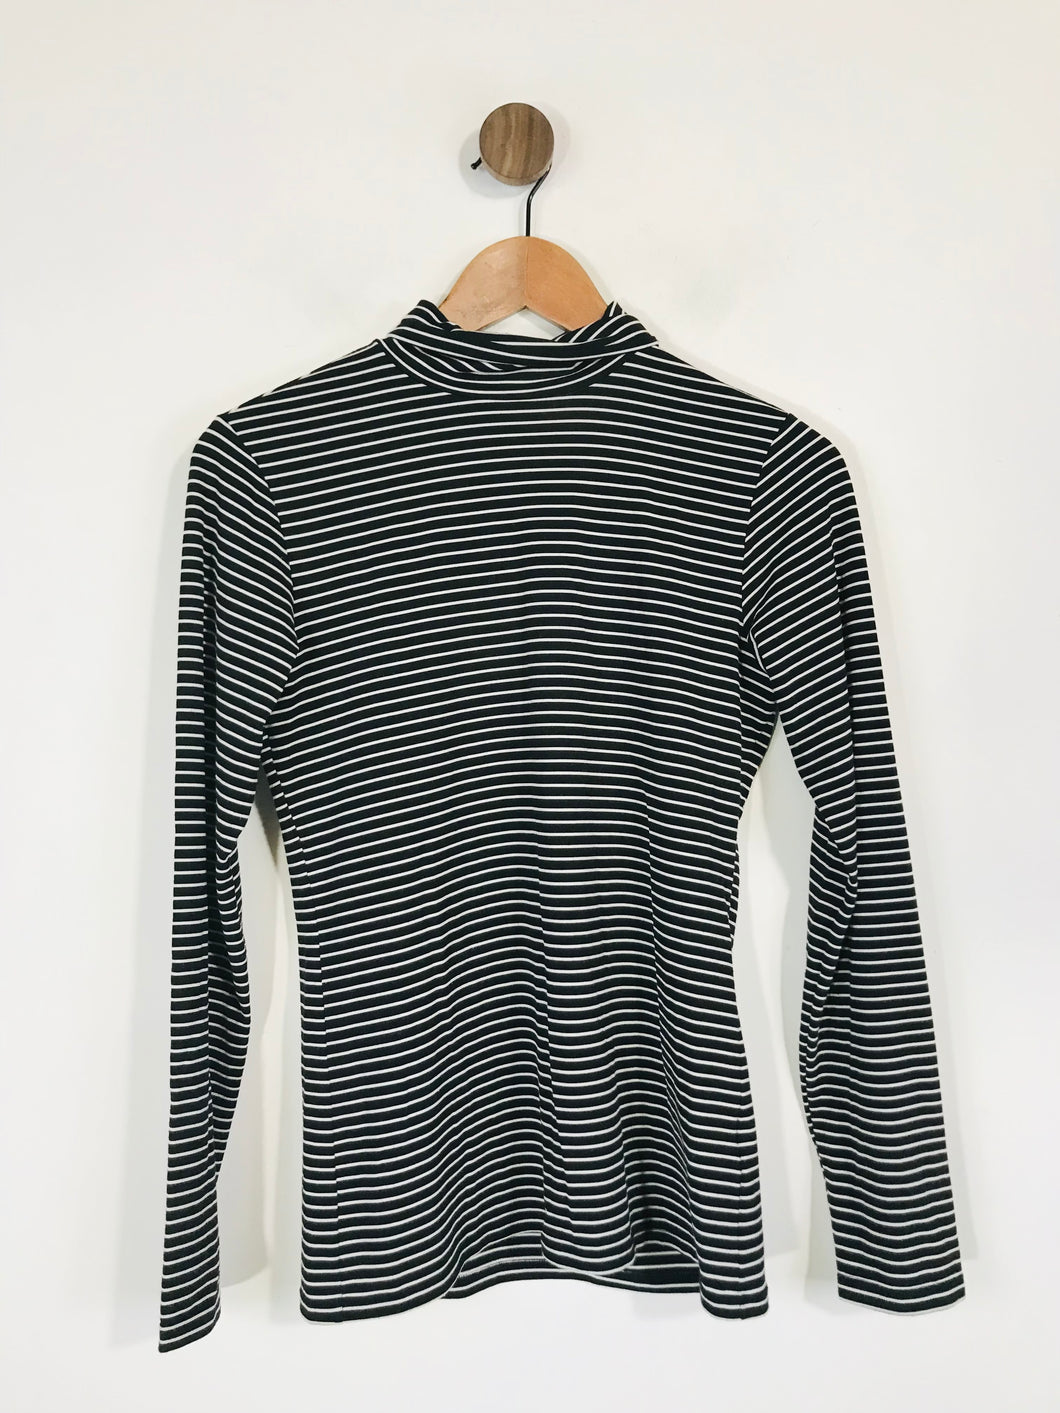 Uniqlo Women's Striped High Neck T-Shirt | M UK10-12 | Black